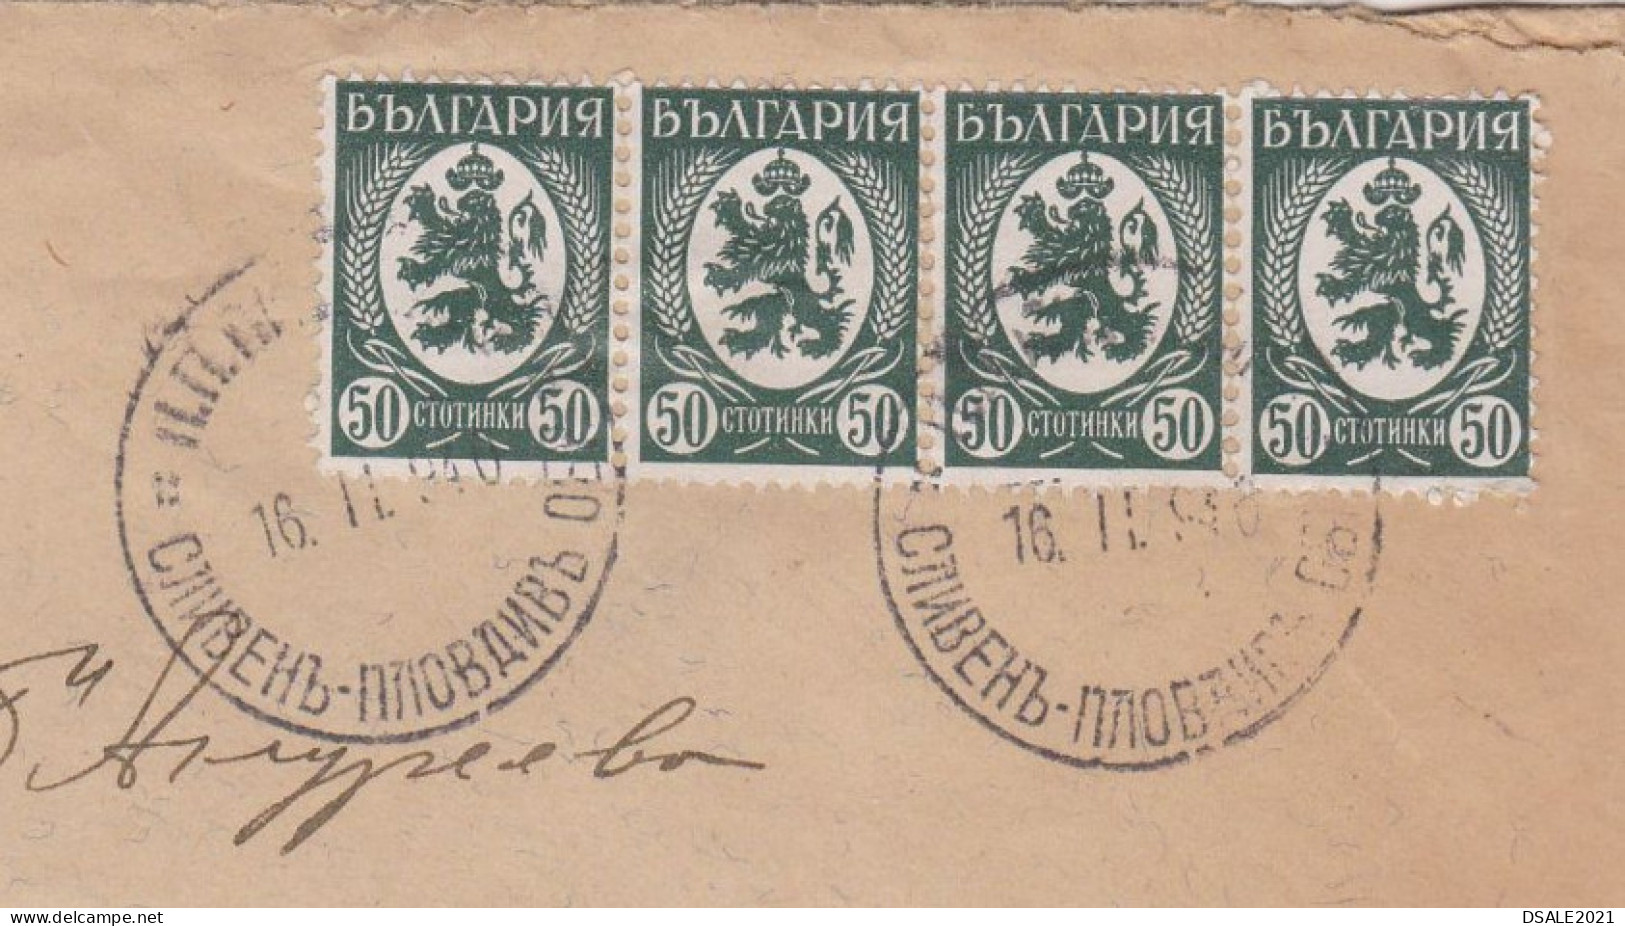 Bulgaria Bulgarie1940 Cover W/Topic Stamps Sent Via Railway TPO ZUG Bahnpost (SLIVEN-PLOVDIV BACK) To Kazanlik (937) - Cartas & Documentos